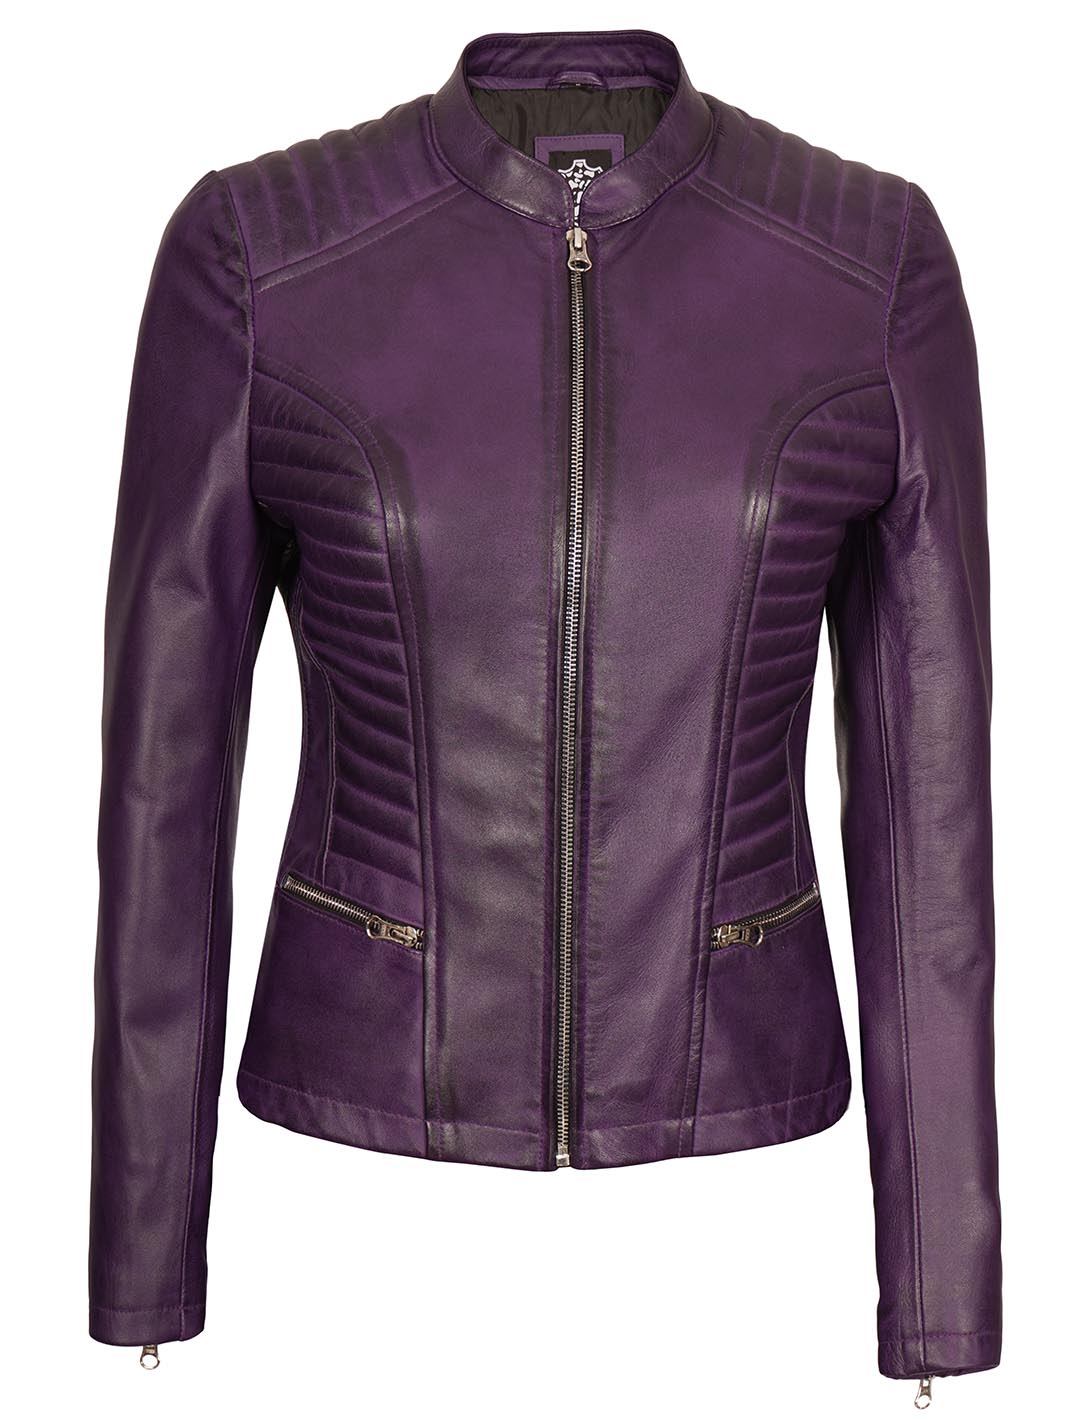 Womens purple leather Jacket